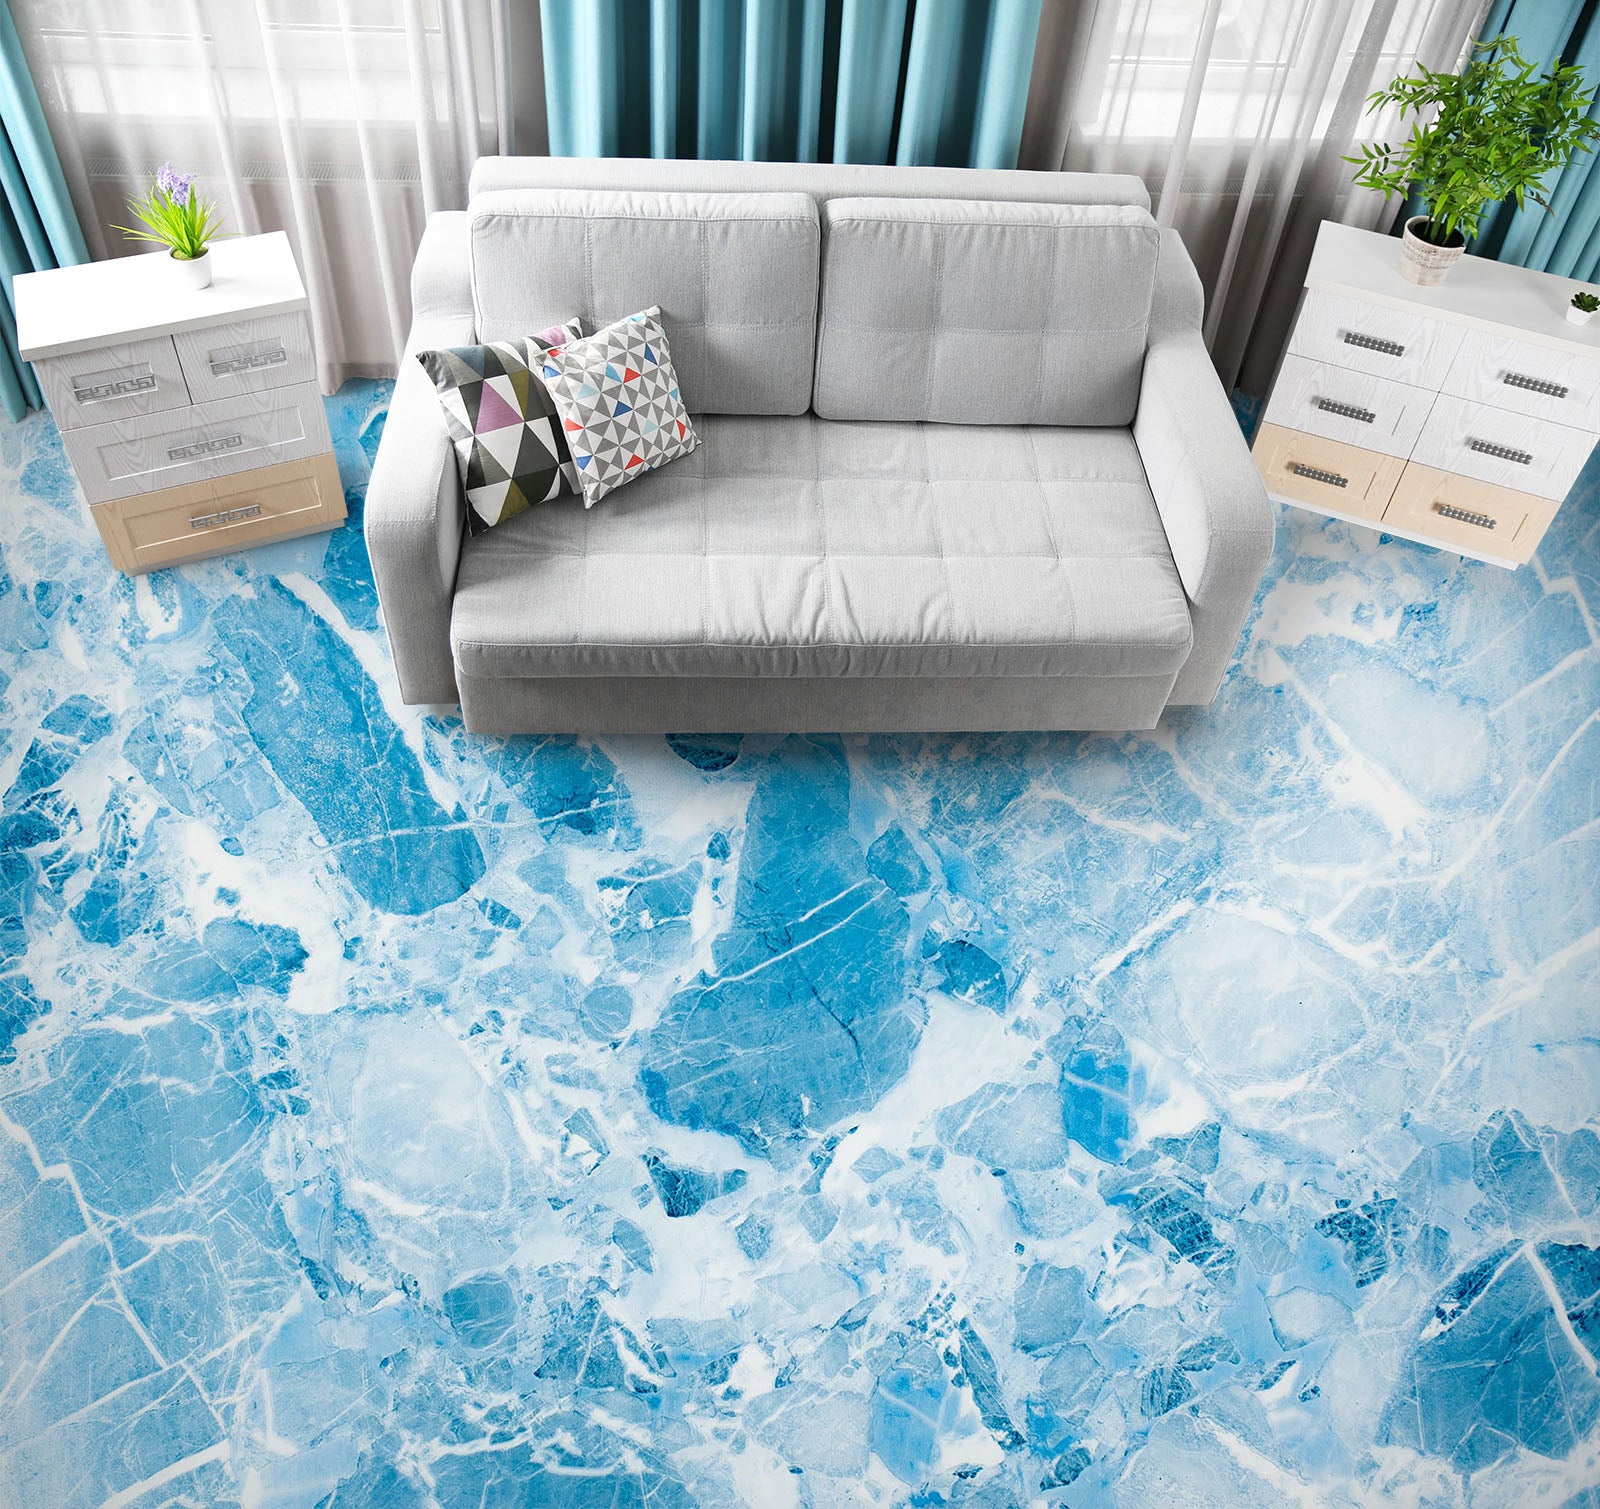 3D Fantasy Blue Ice Cubes 811 Floor Mural